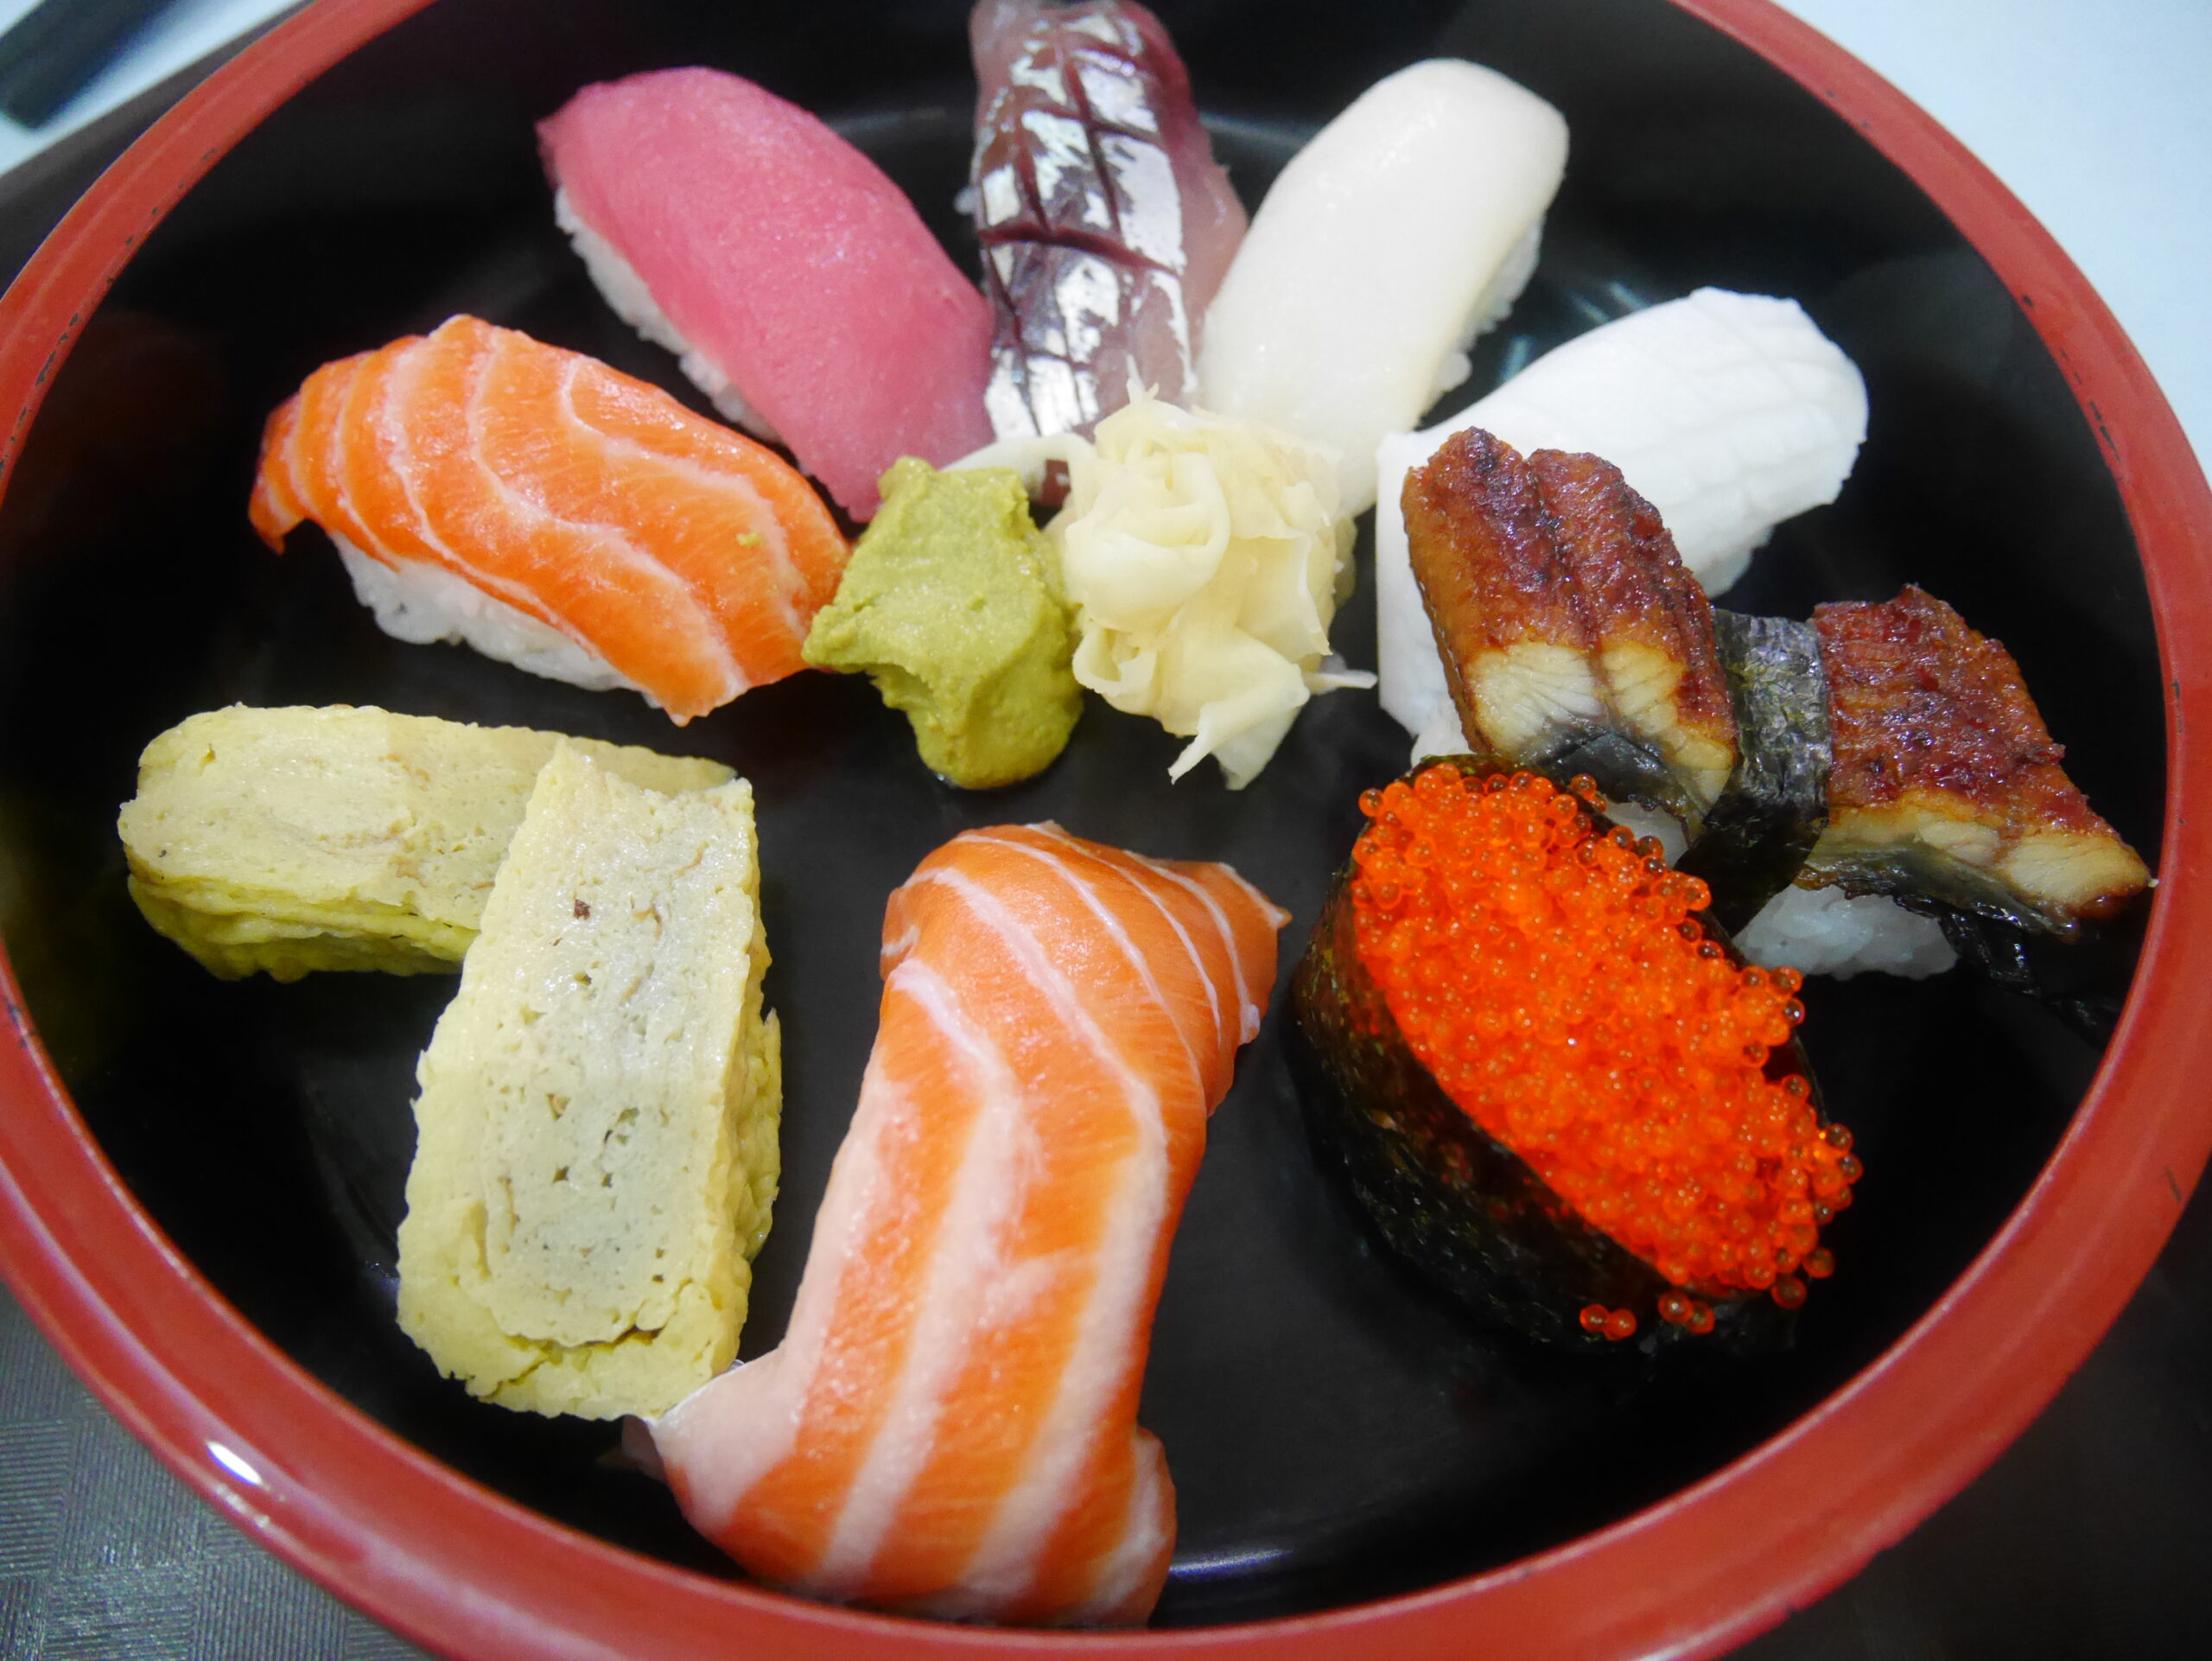 Affordable Nigiri sushi set at RM30